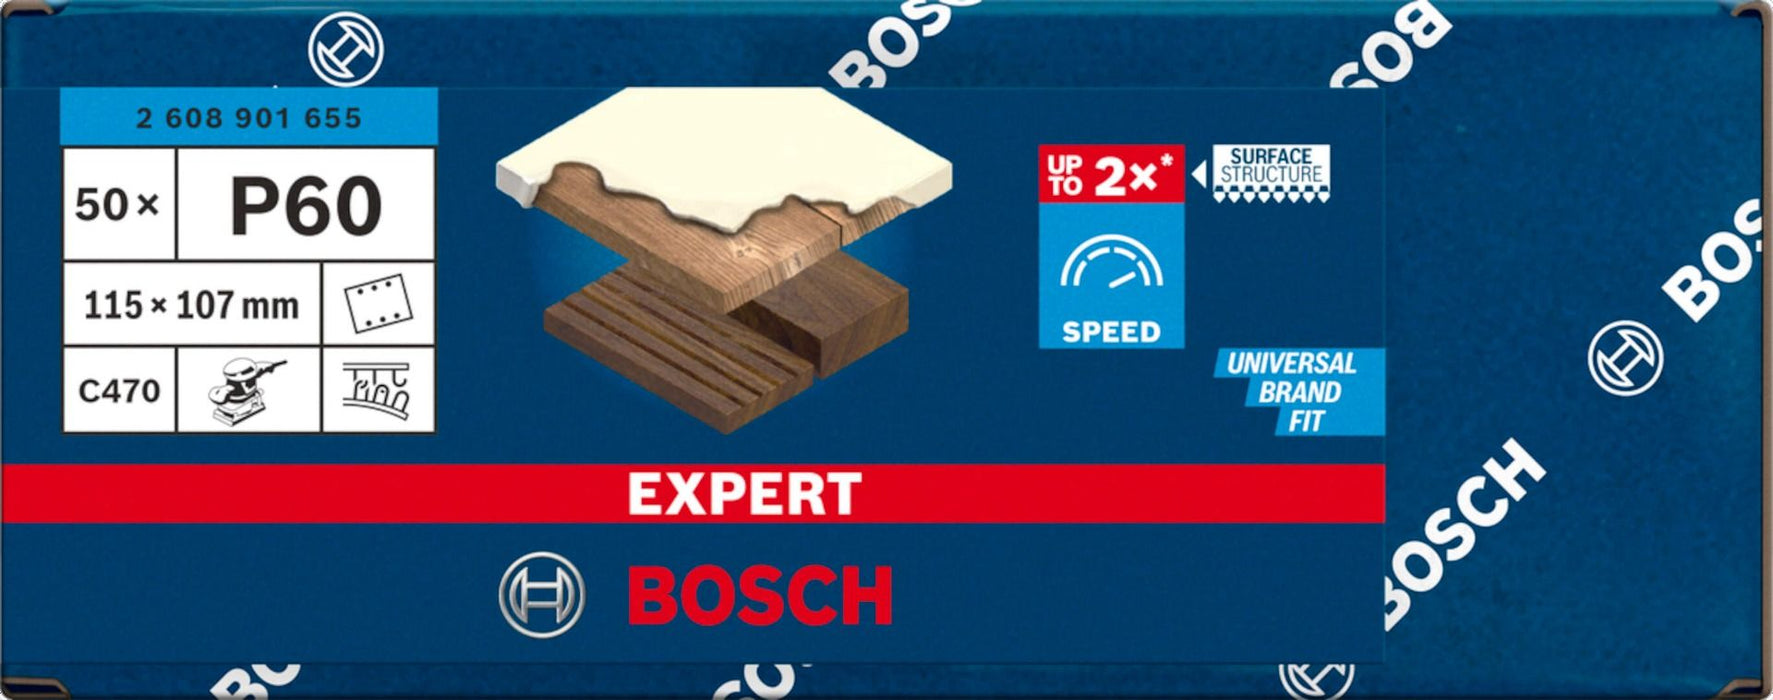 Bosch EXPERT list C470, 115 x 107mm granulacija 60; pakovanje od 50 komada (2608901655)